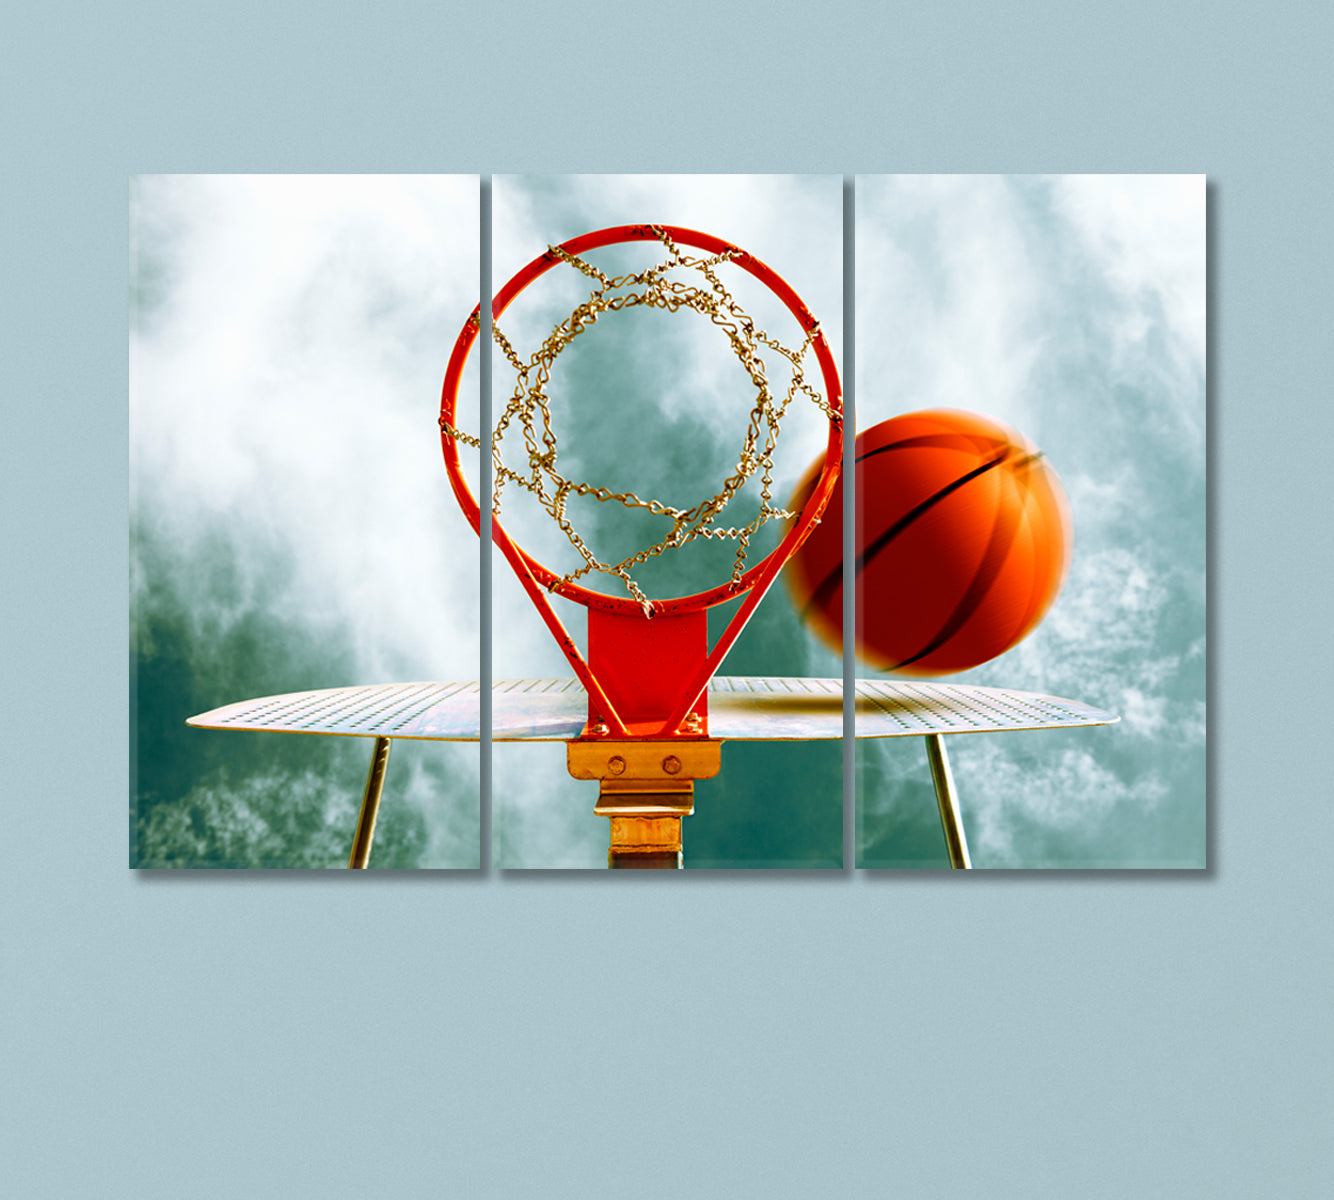 Basketball Ball Flies into a Ring Canvas Print-Canvas Print-CetArt-3 Panels-36x24 inches-CetArt